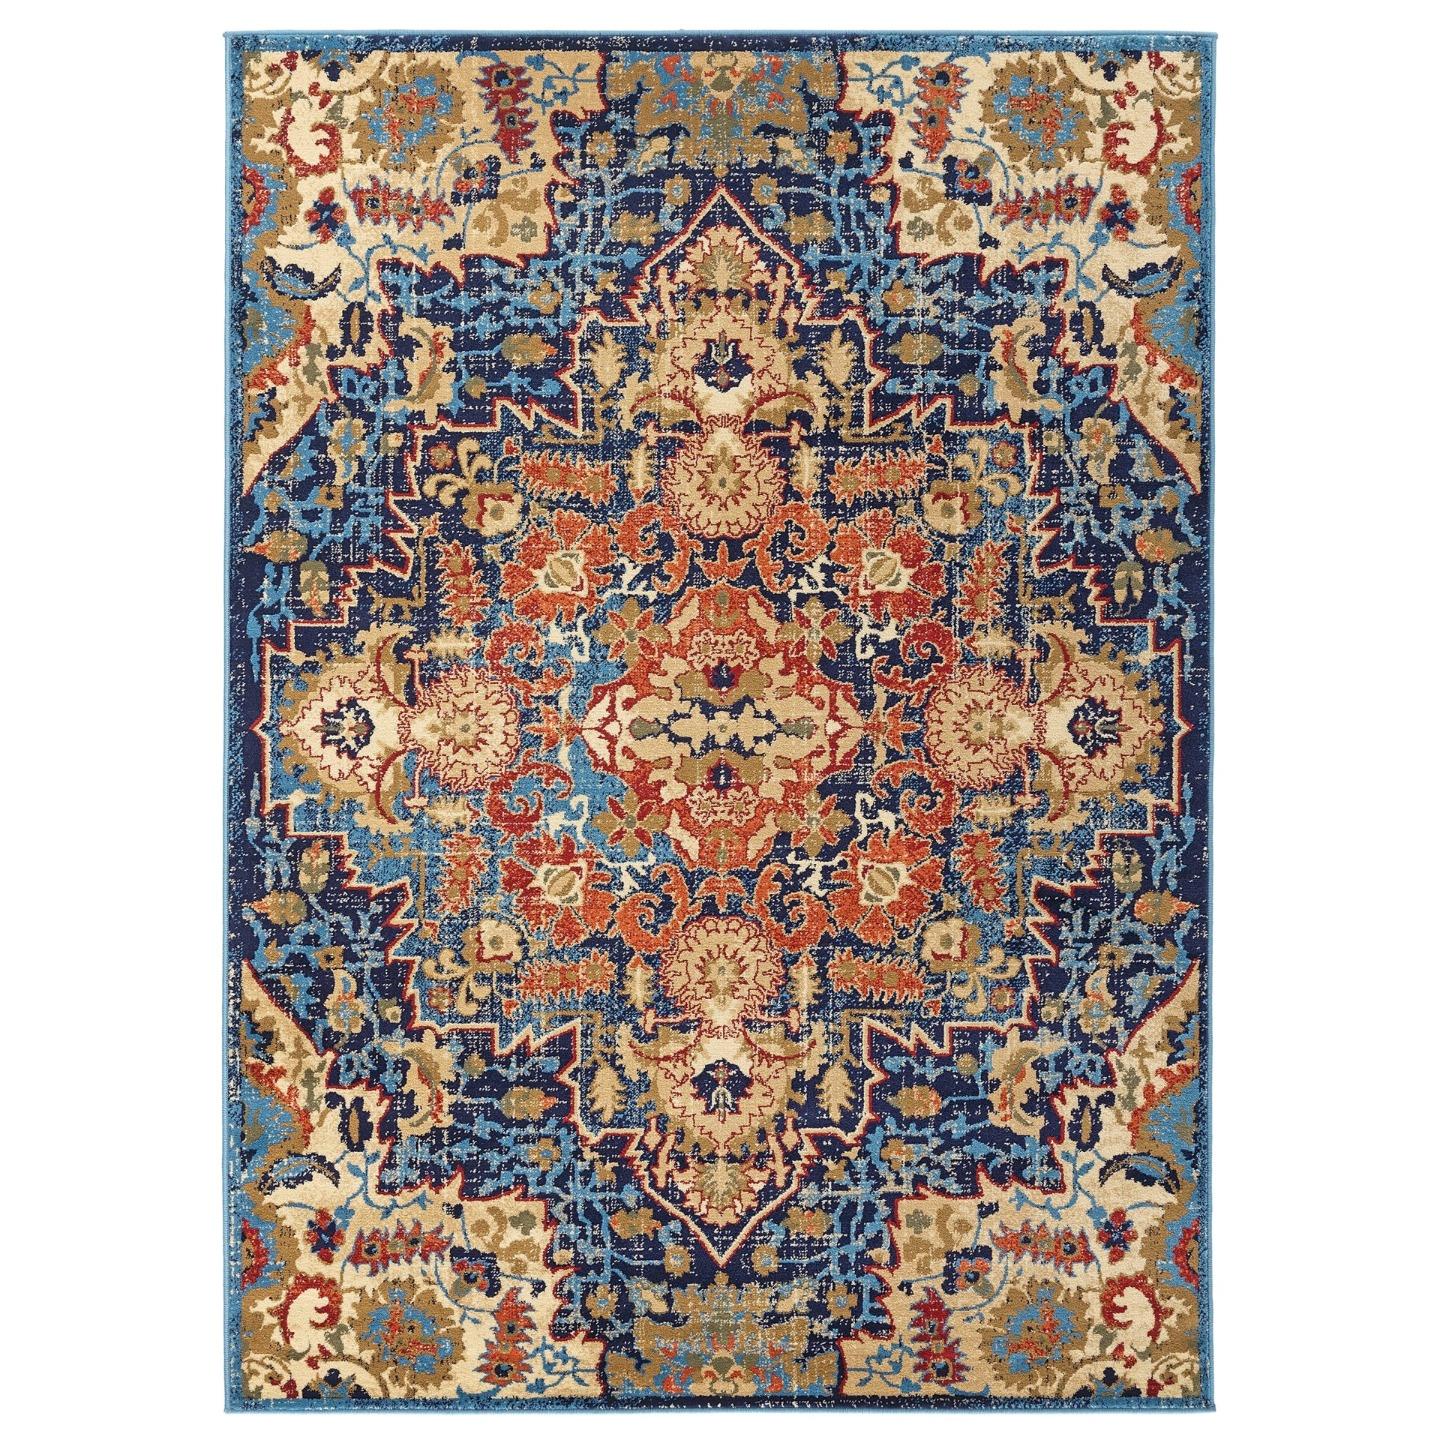 Luxe Weavers Oriental Blue 8x10 Vintage Area Rug, Southwestern Geometric Carpet - image 2 of 6